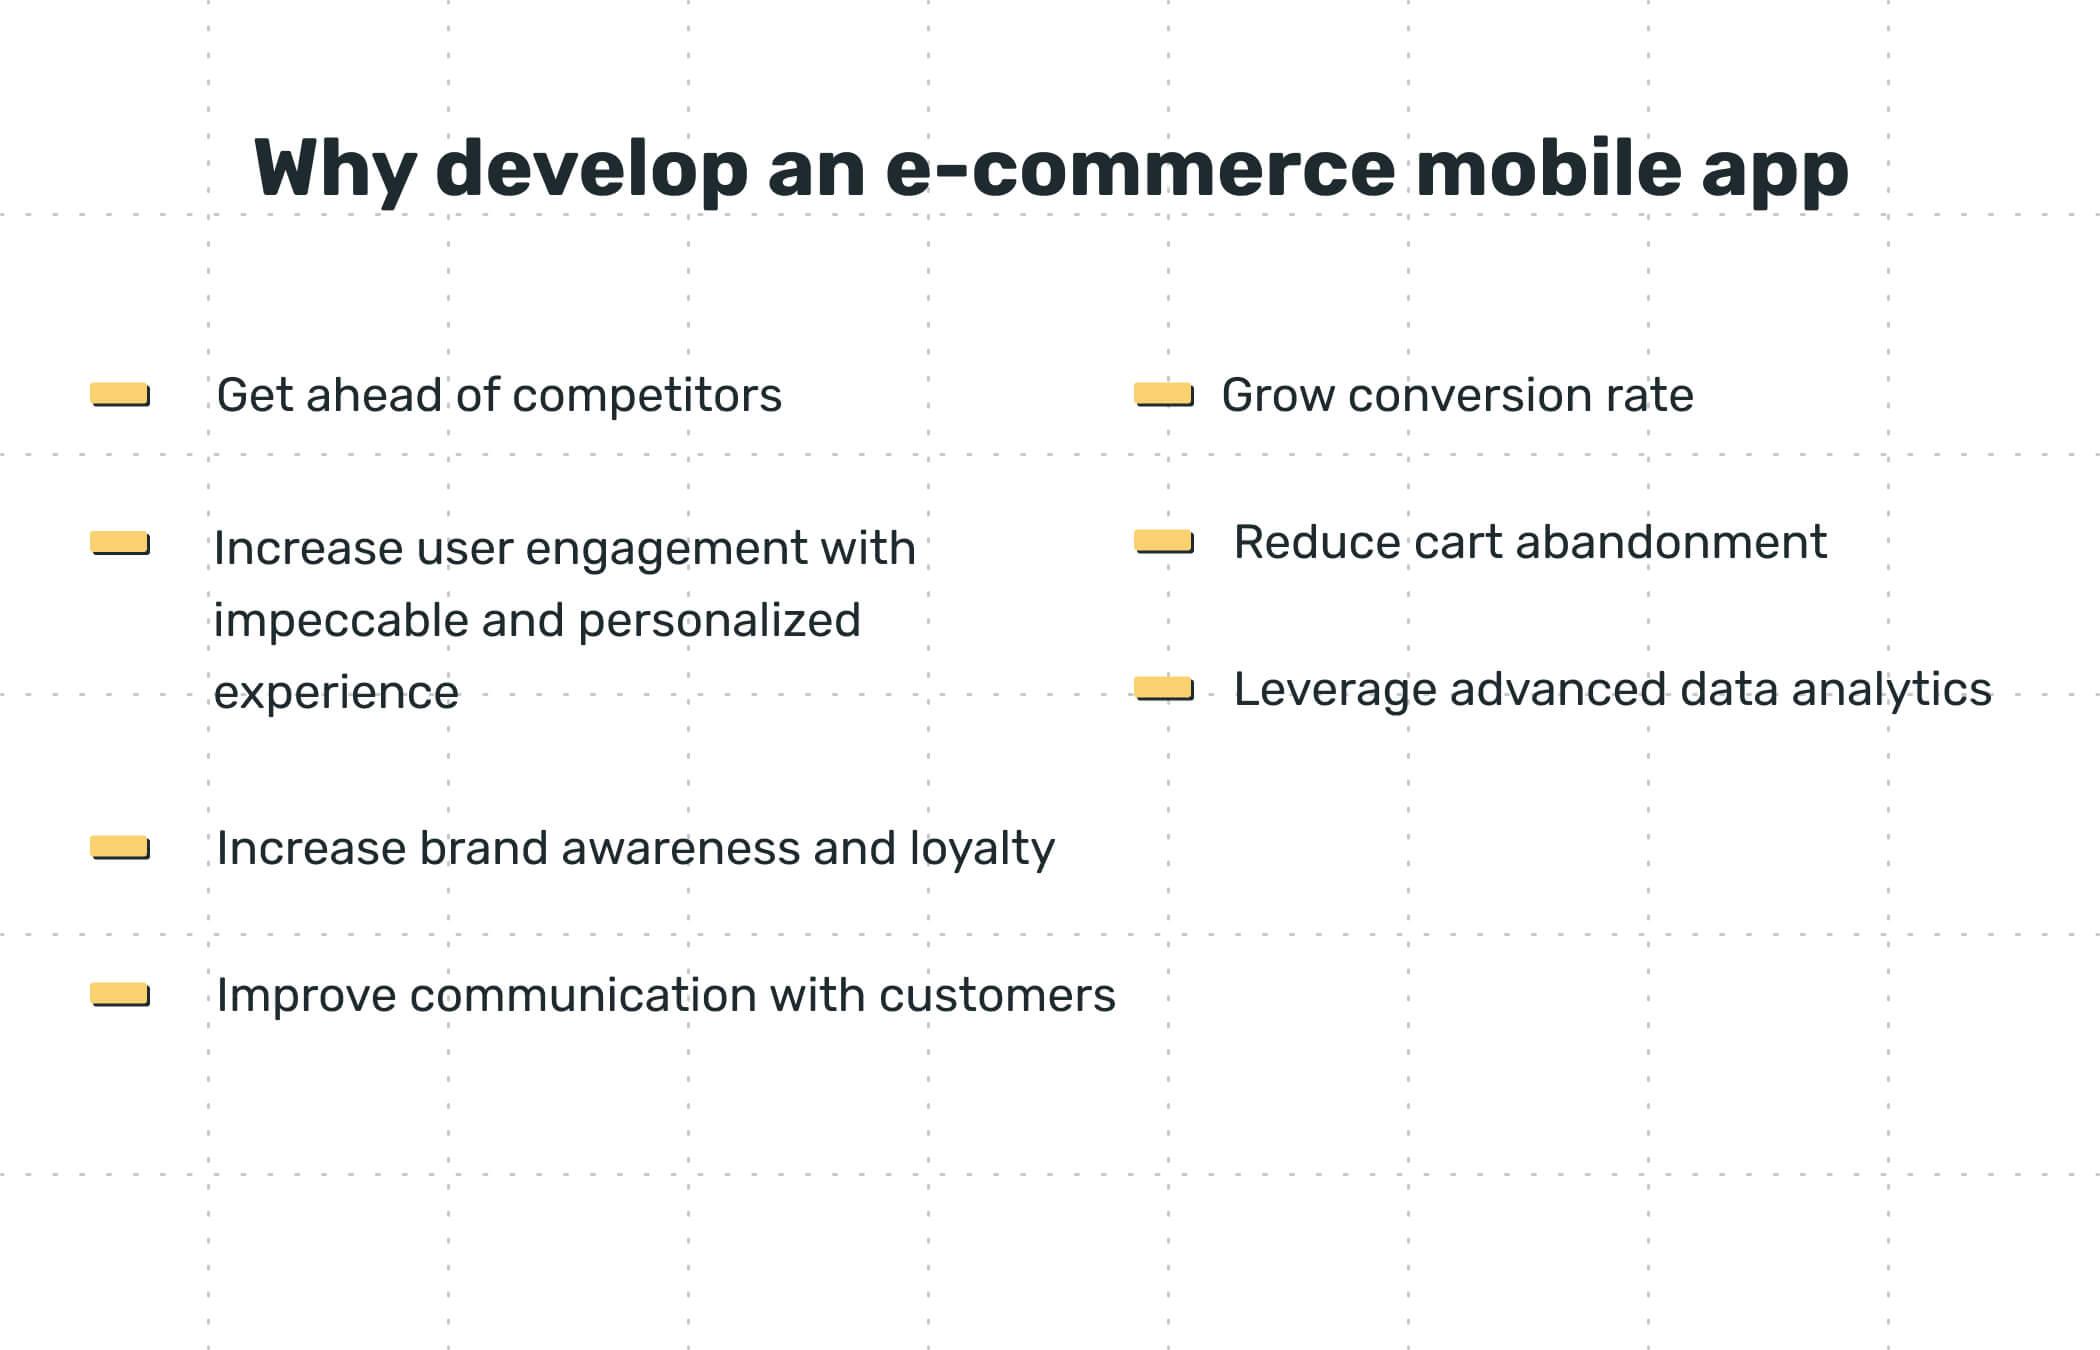 Benefits of e-commerce mobile app